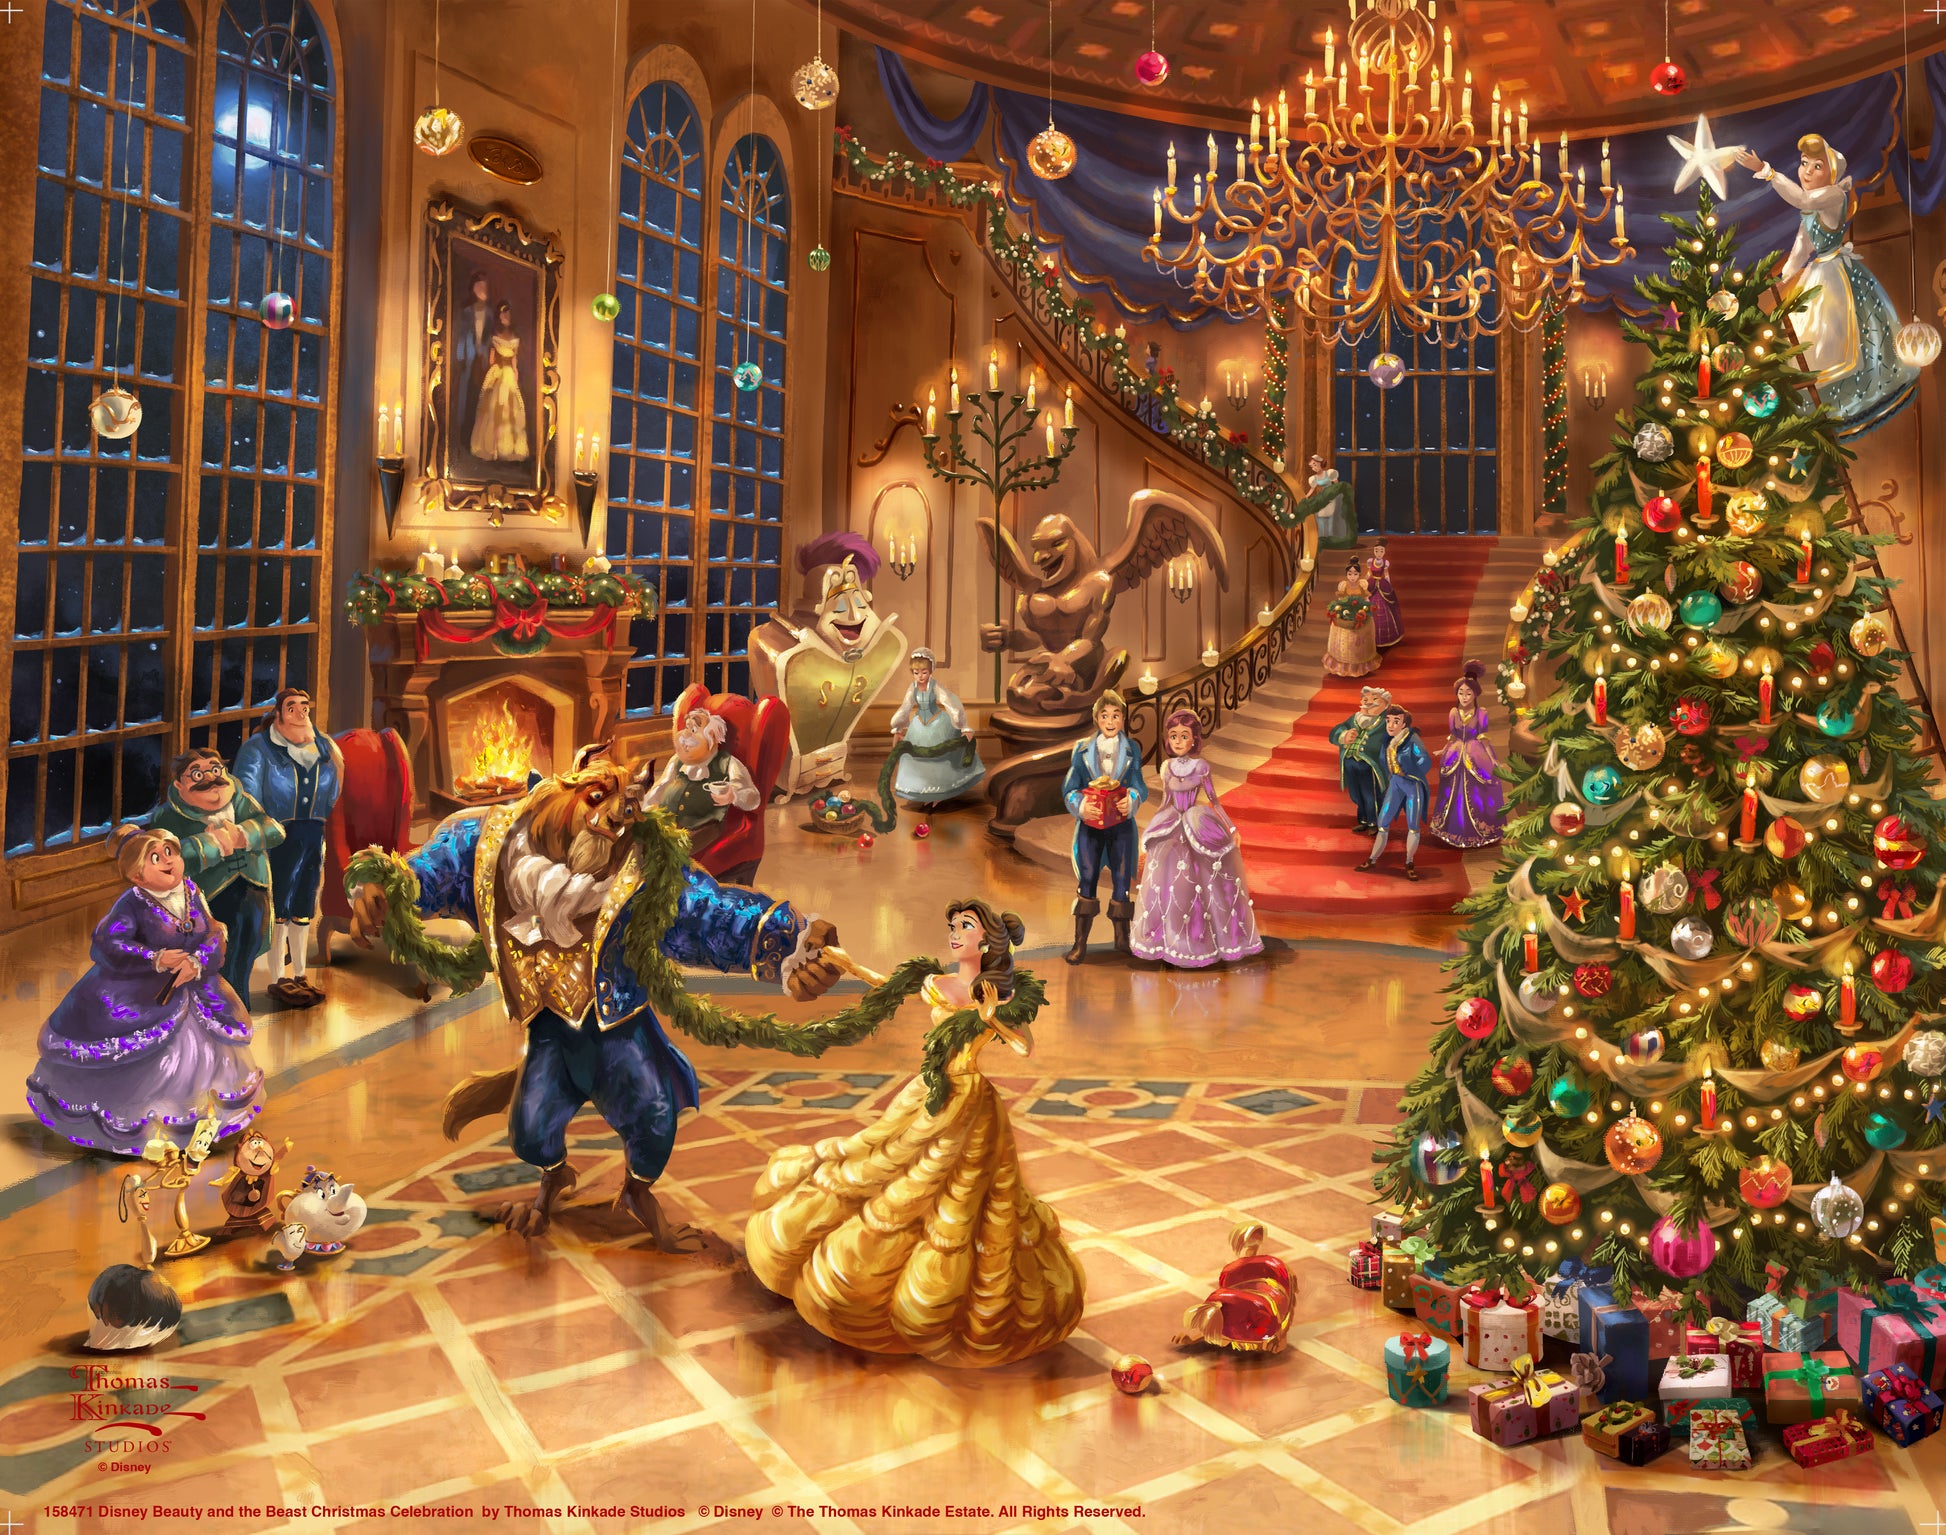 158471_GFT Disney Beauty and the Beast Christmas Celebration 11X14 ART PRINT.jpg